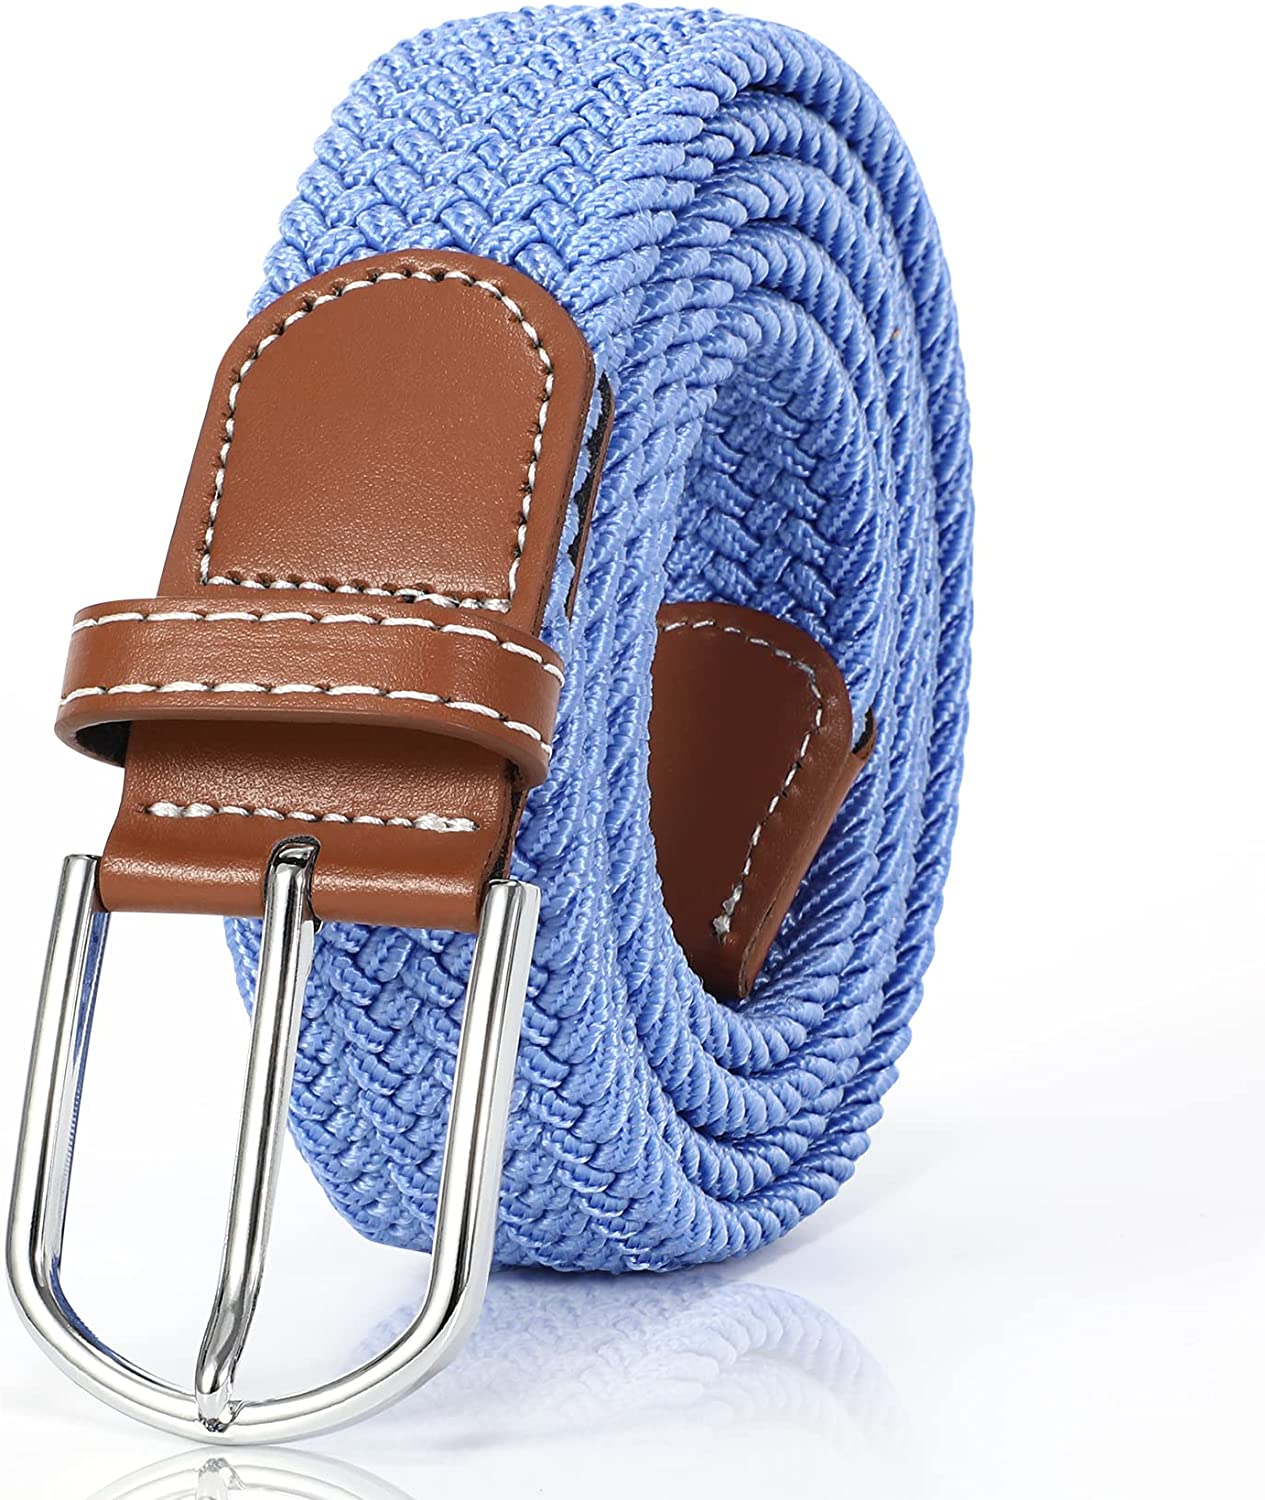  XZQTIVE Braided Belt Stretch Belt For Men And Women